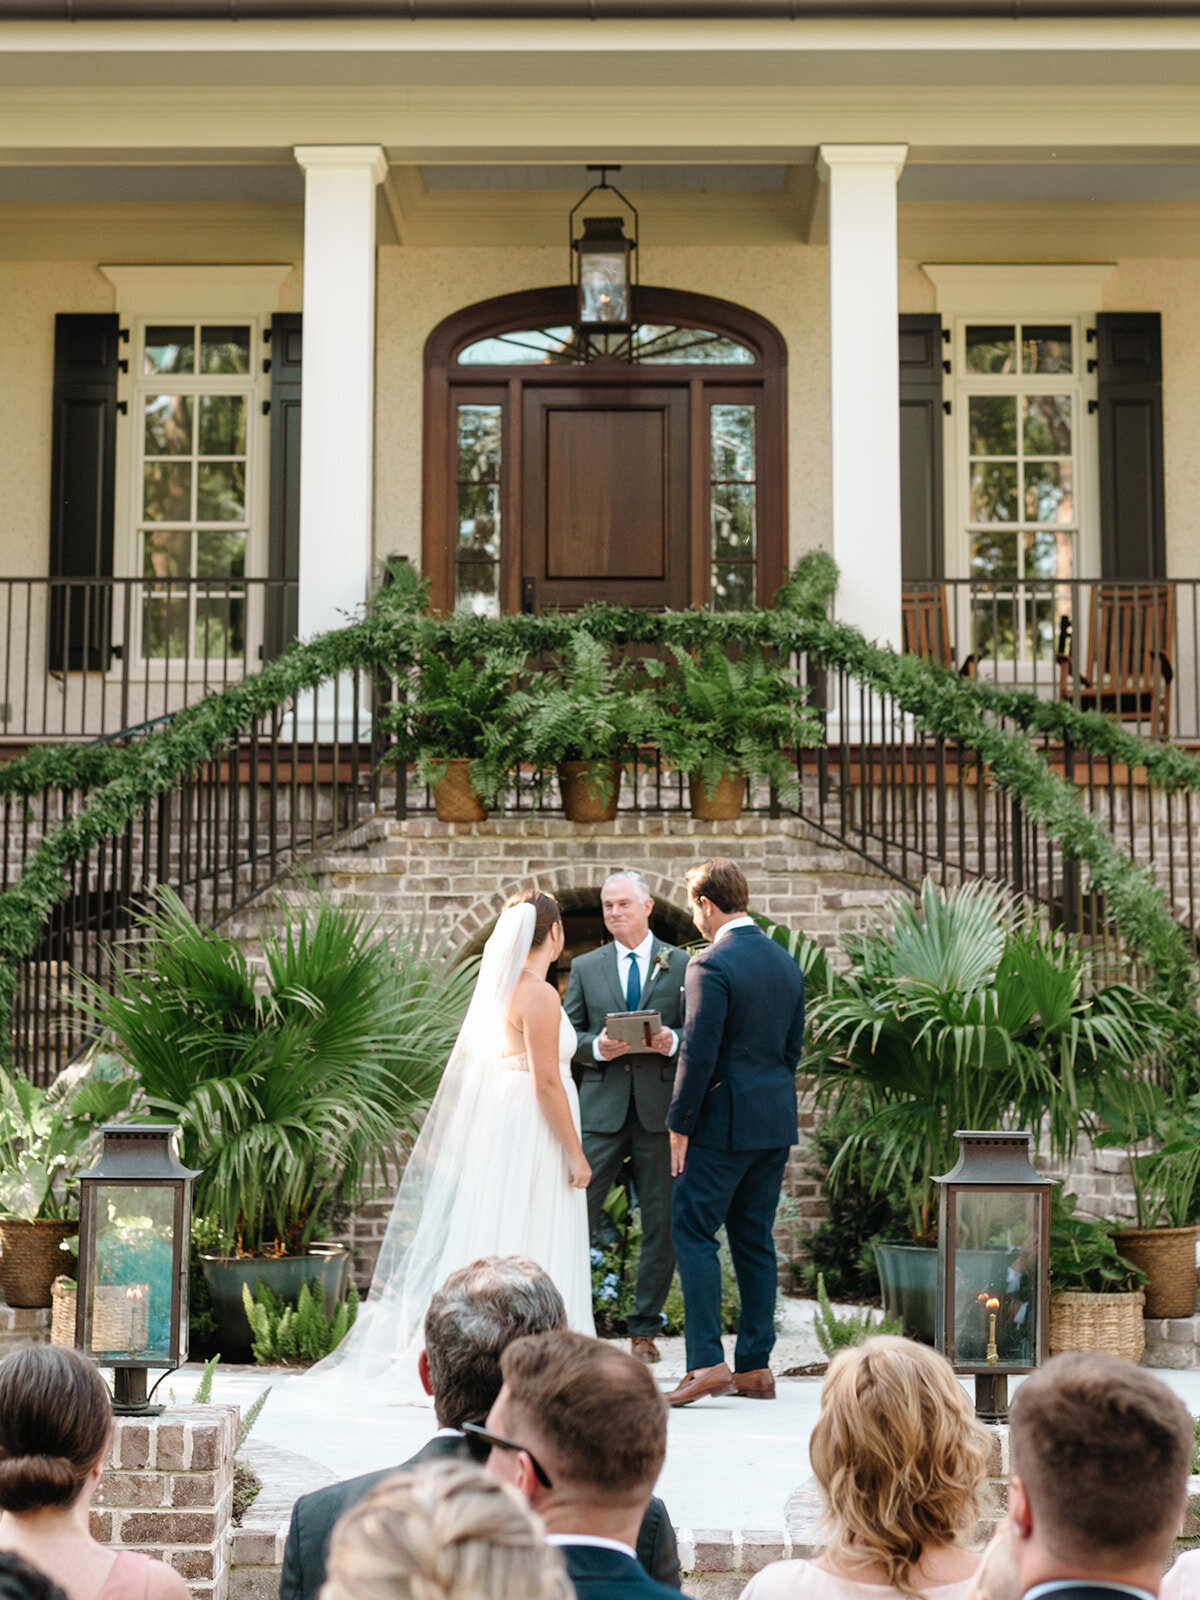 Hilton Head Island Wedding  | Sea Pines Wedding  | Trish Beck Events | Southeast Wedding Planner |  Josh Morehouse Photography  |  Organic Plant Greenhouse inspired Wedding ceremony